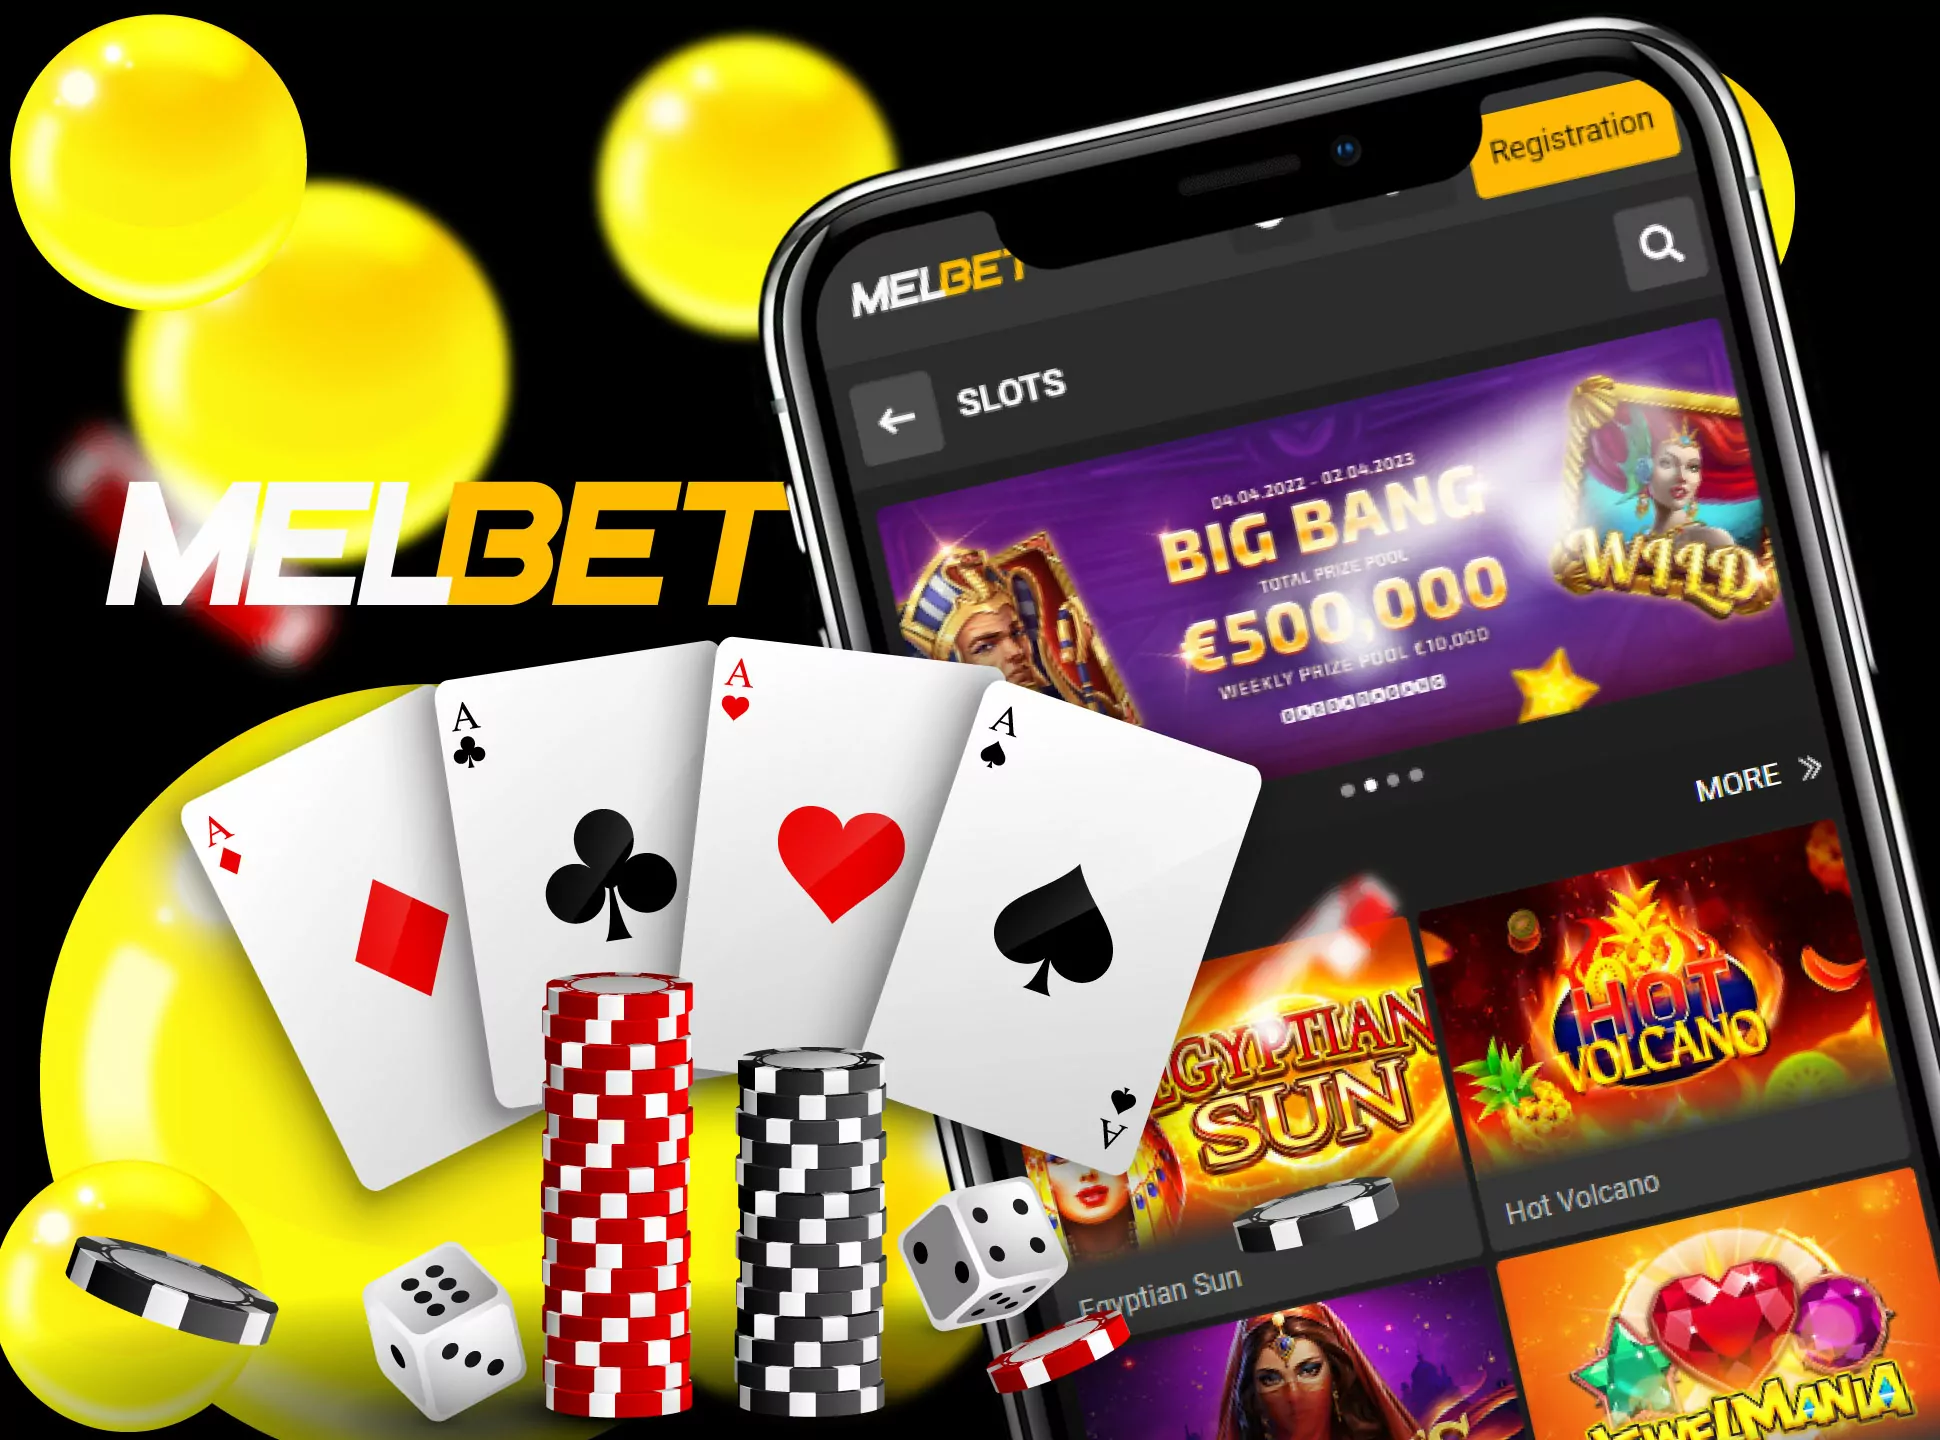 Play casino games using Melbet casino app